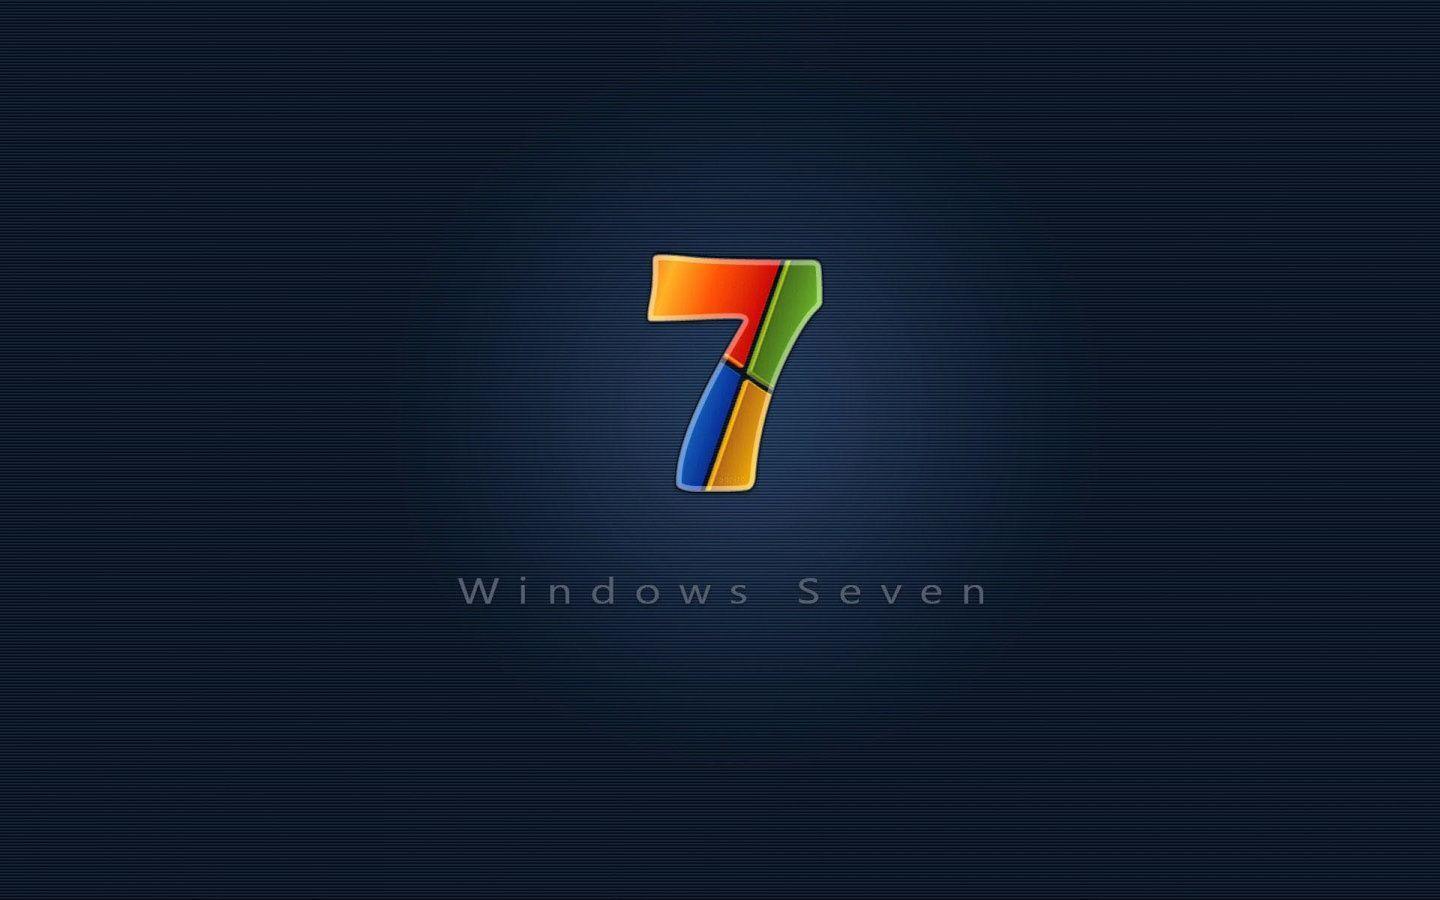 Desktop Windows 7 Wallpaper Hd Download - Fondo Makers Ideas
